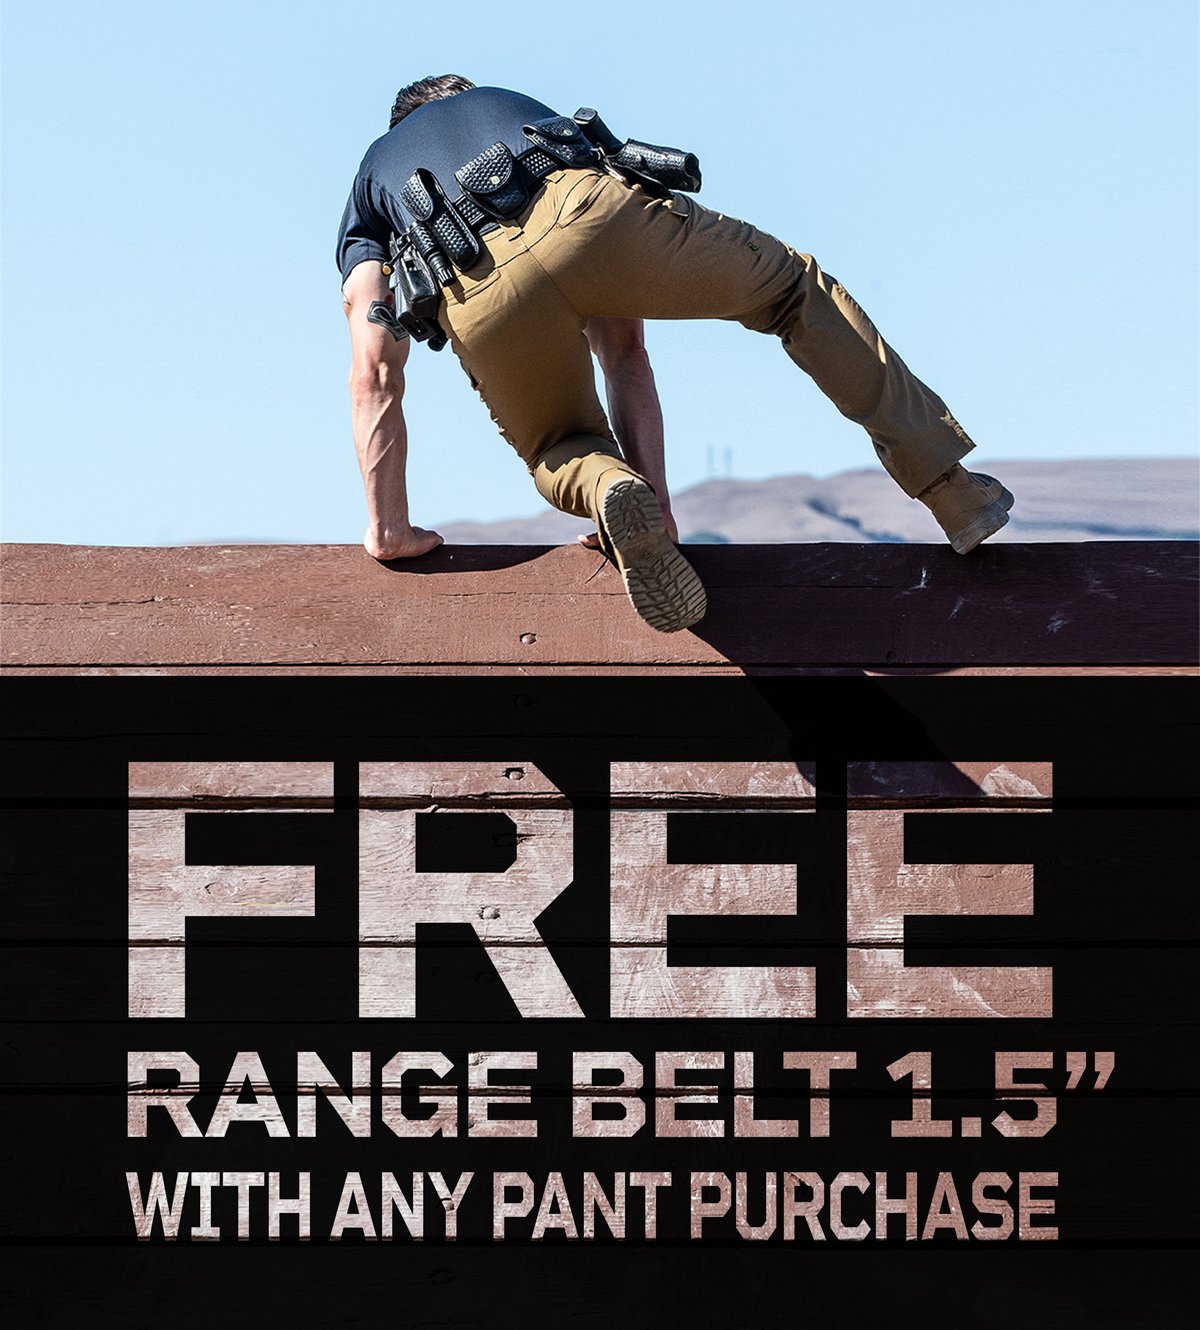 Free Range Belt 1.5" with any pant purchase